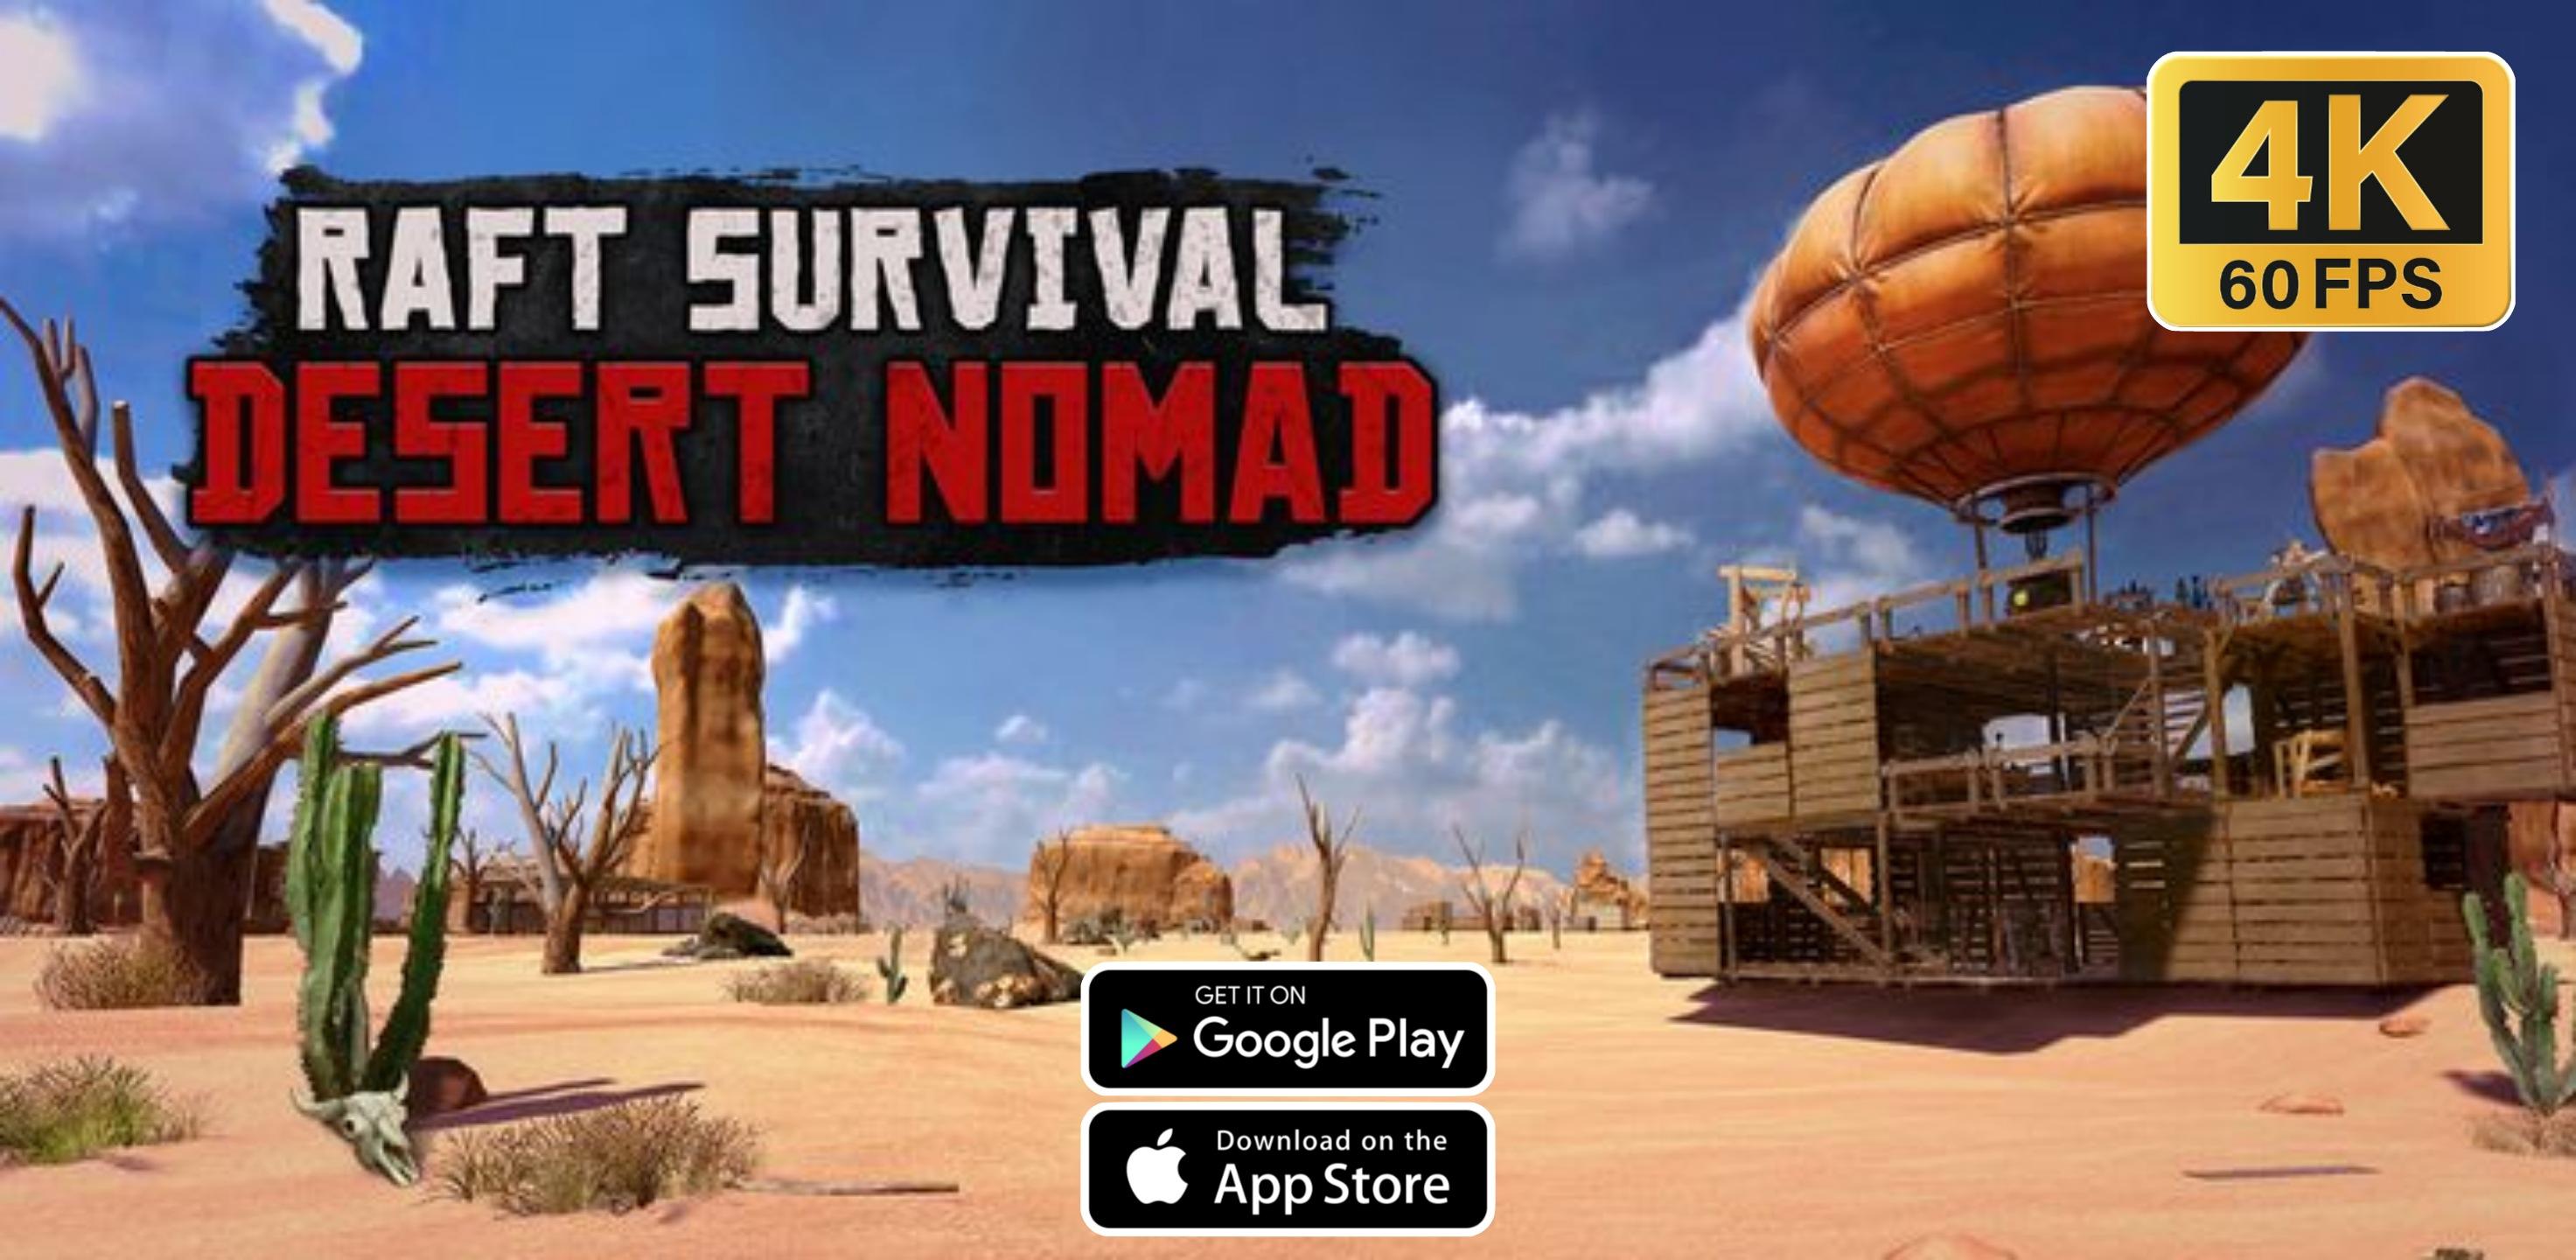 Survival Simulator – Apps on Google Play